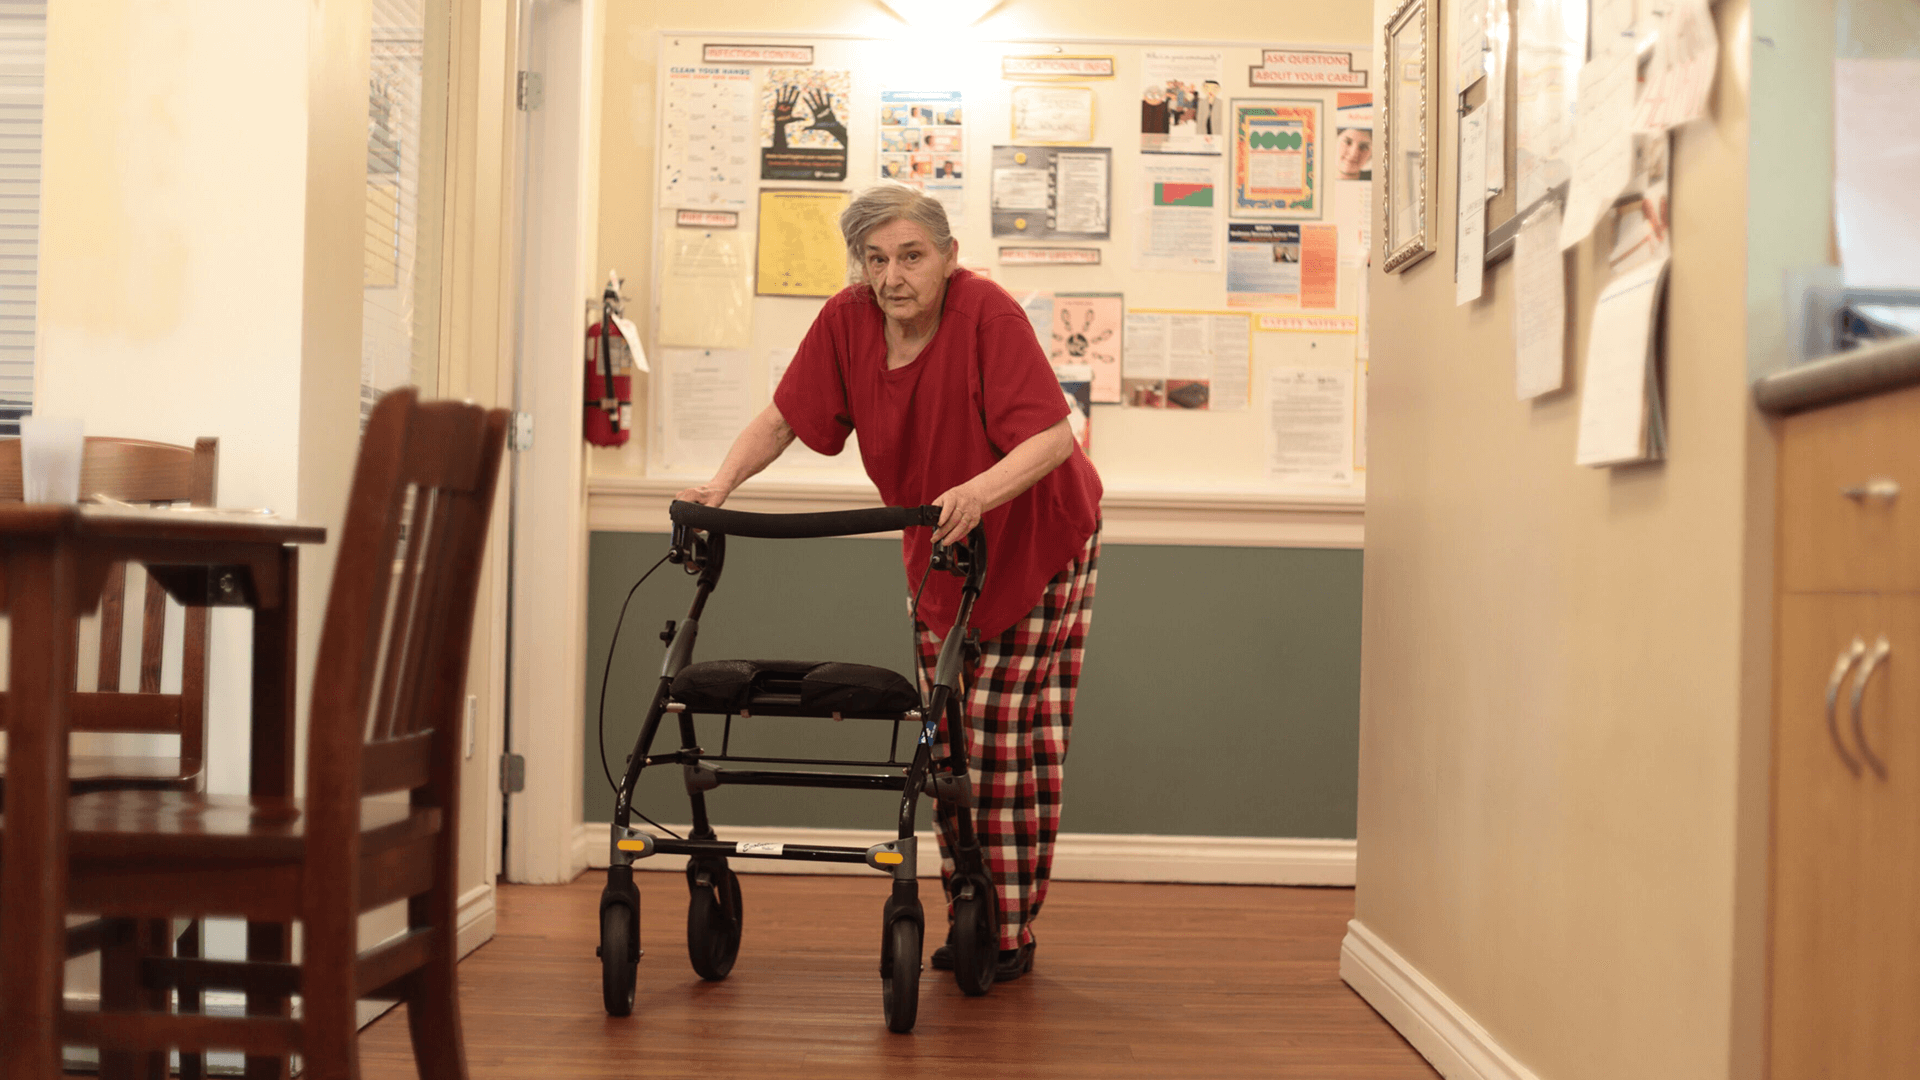 An elderly woman walking in corridors at WM